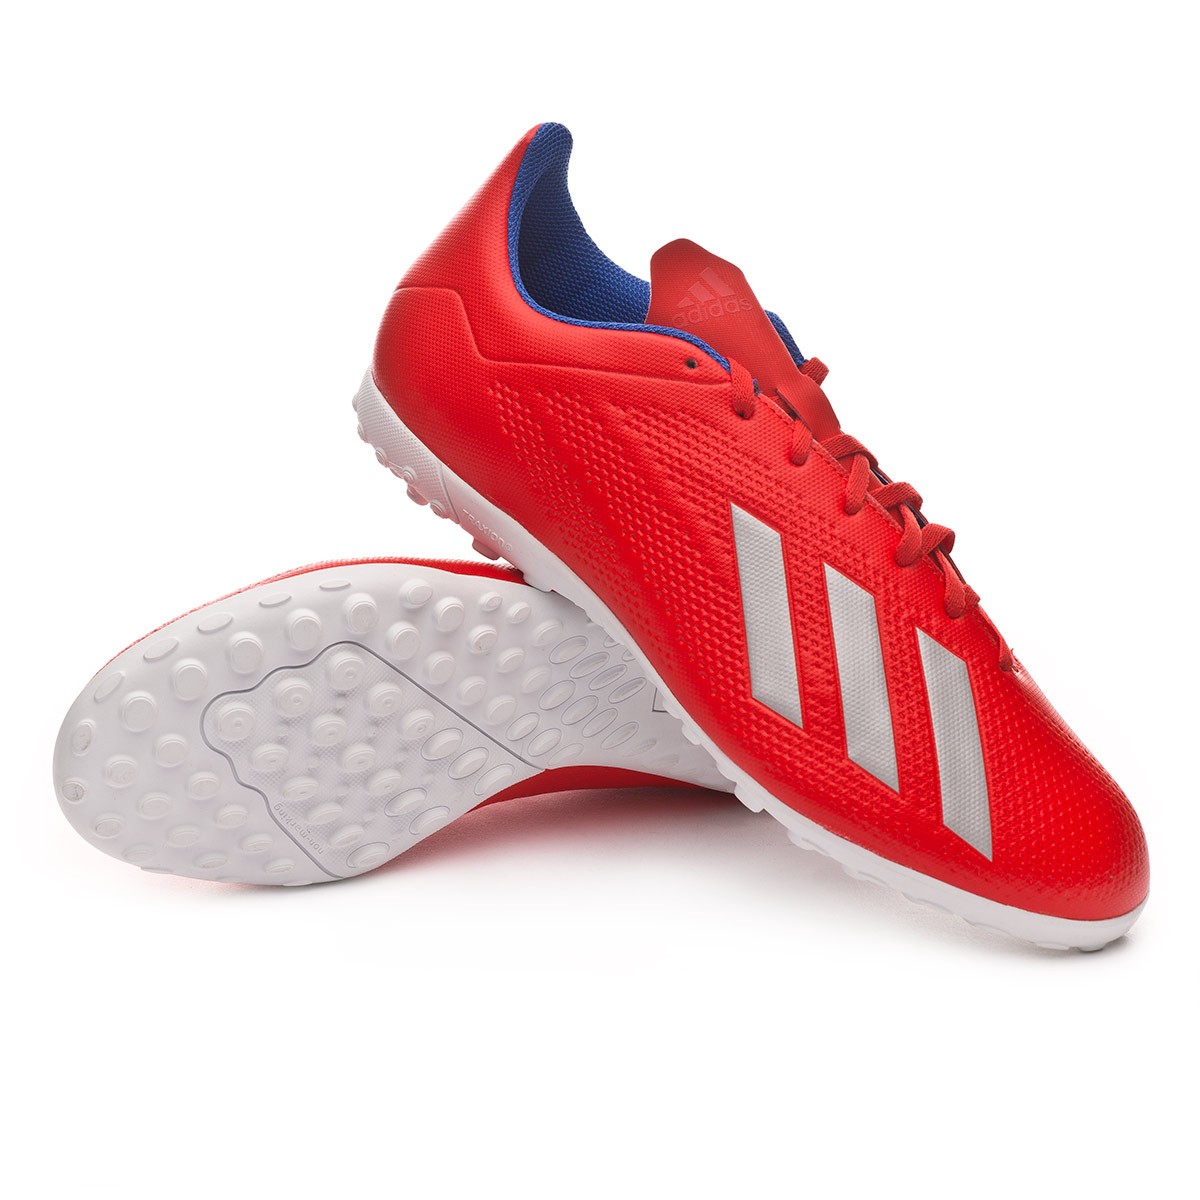 Football Boot adidas X Tango 18.4 Turf Active red-Silver metallic-Bold blue  - Football store Fútbol Emotion